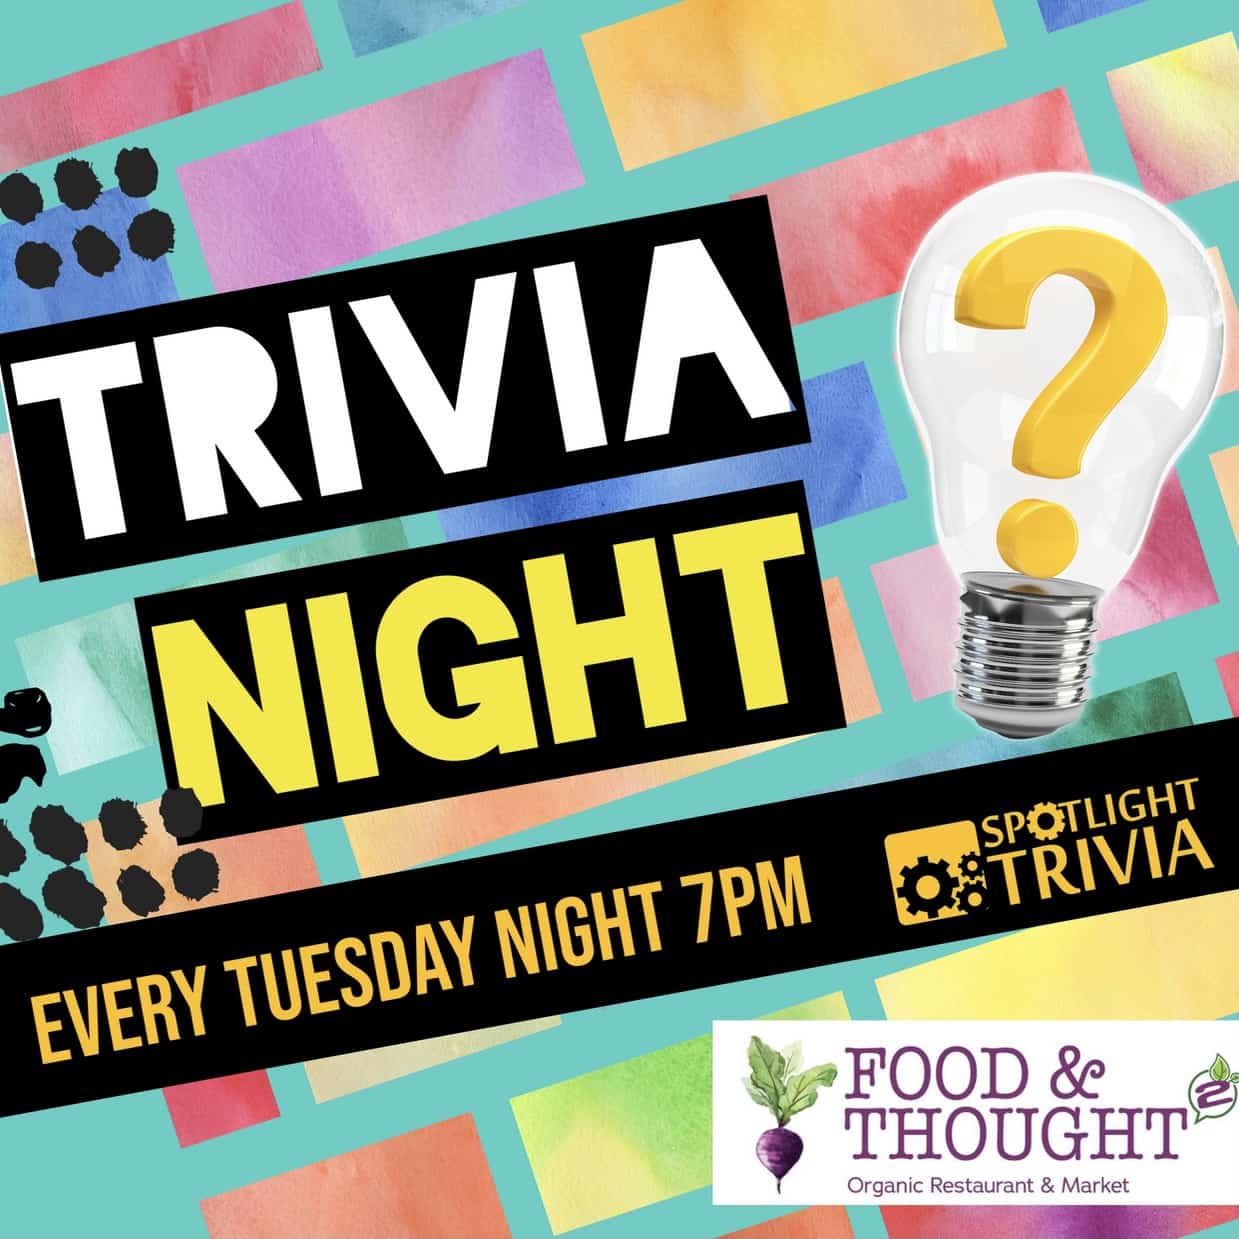 Trivia Night by Spotlight Trivia Every Tuesday Night 7 PM